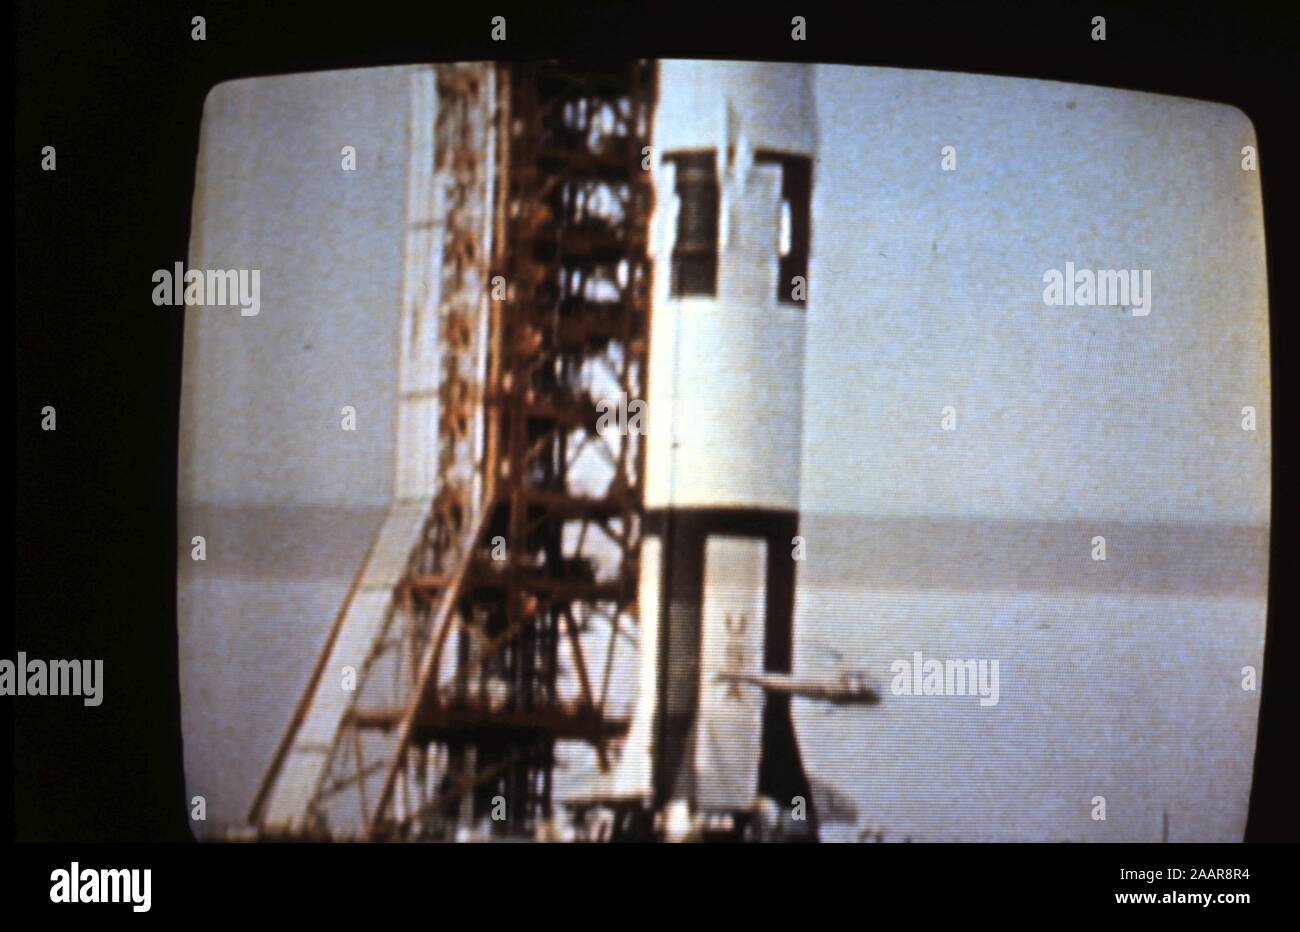 Teleclip Apollo 11 Saturn V rocket at Cape Canaveral; -photo taken directly from TV screen circa 1969-72 Stock Photo